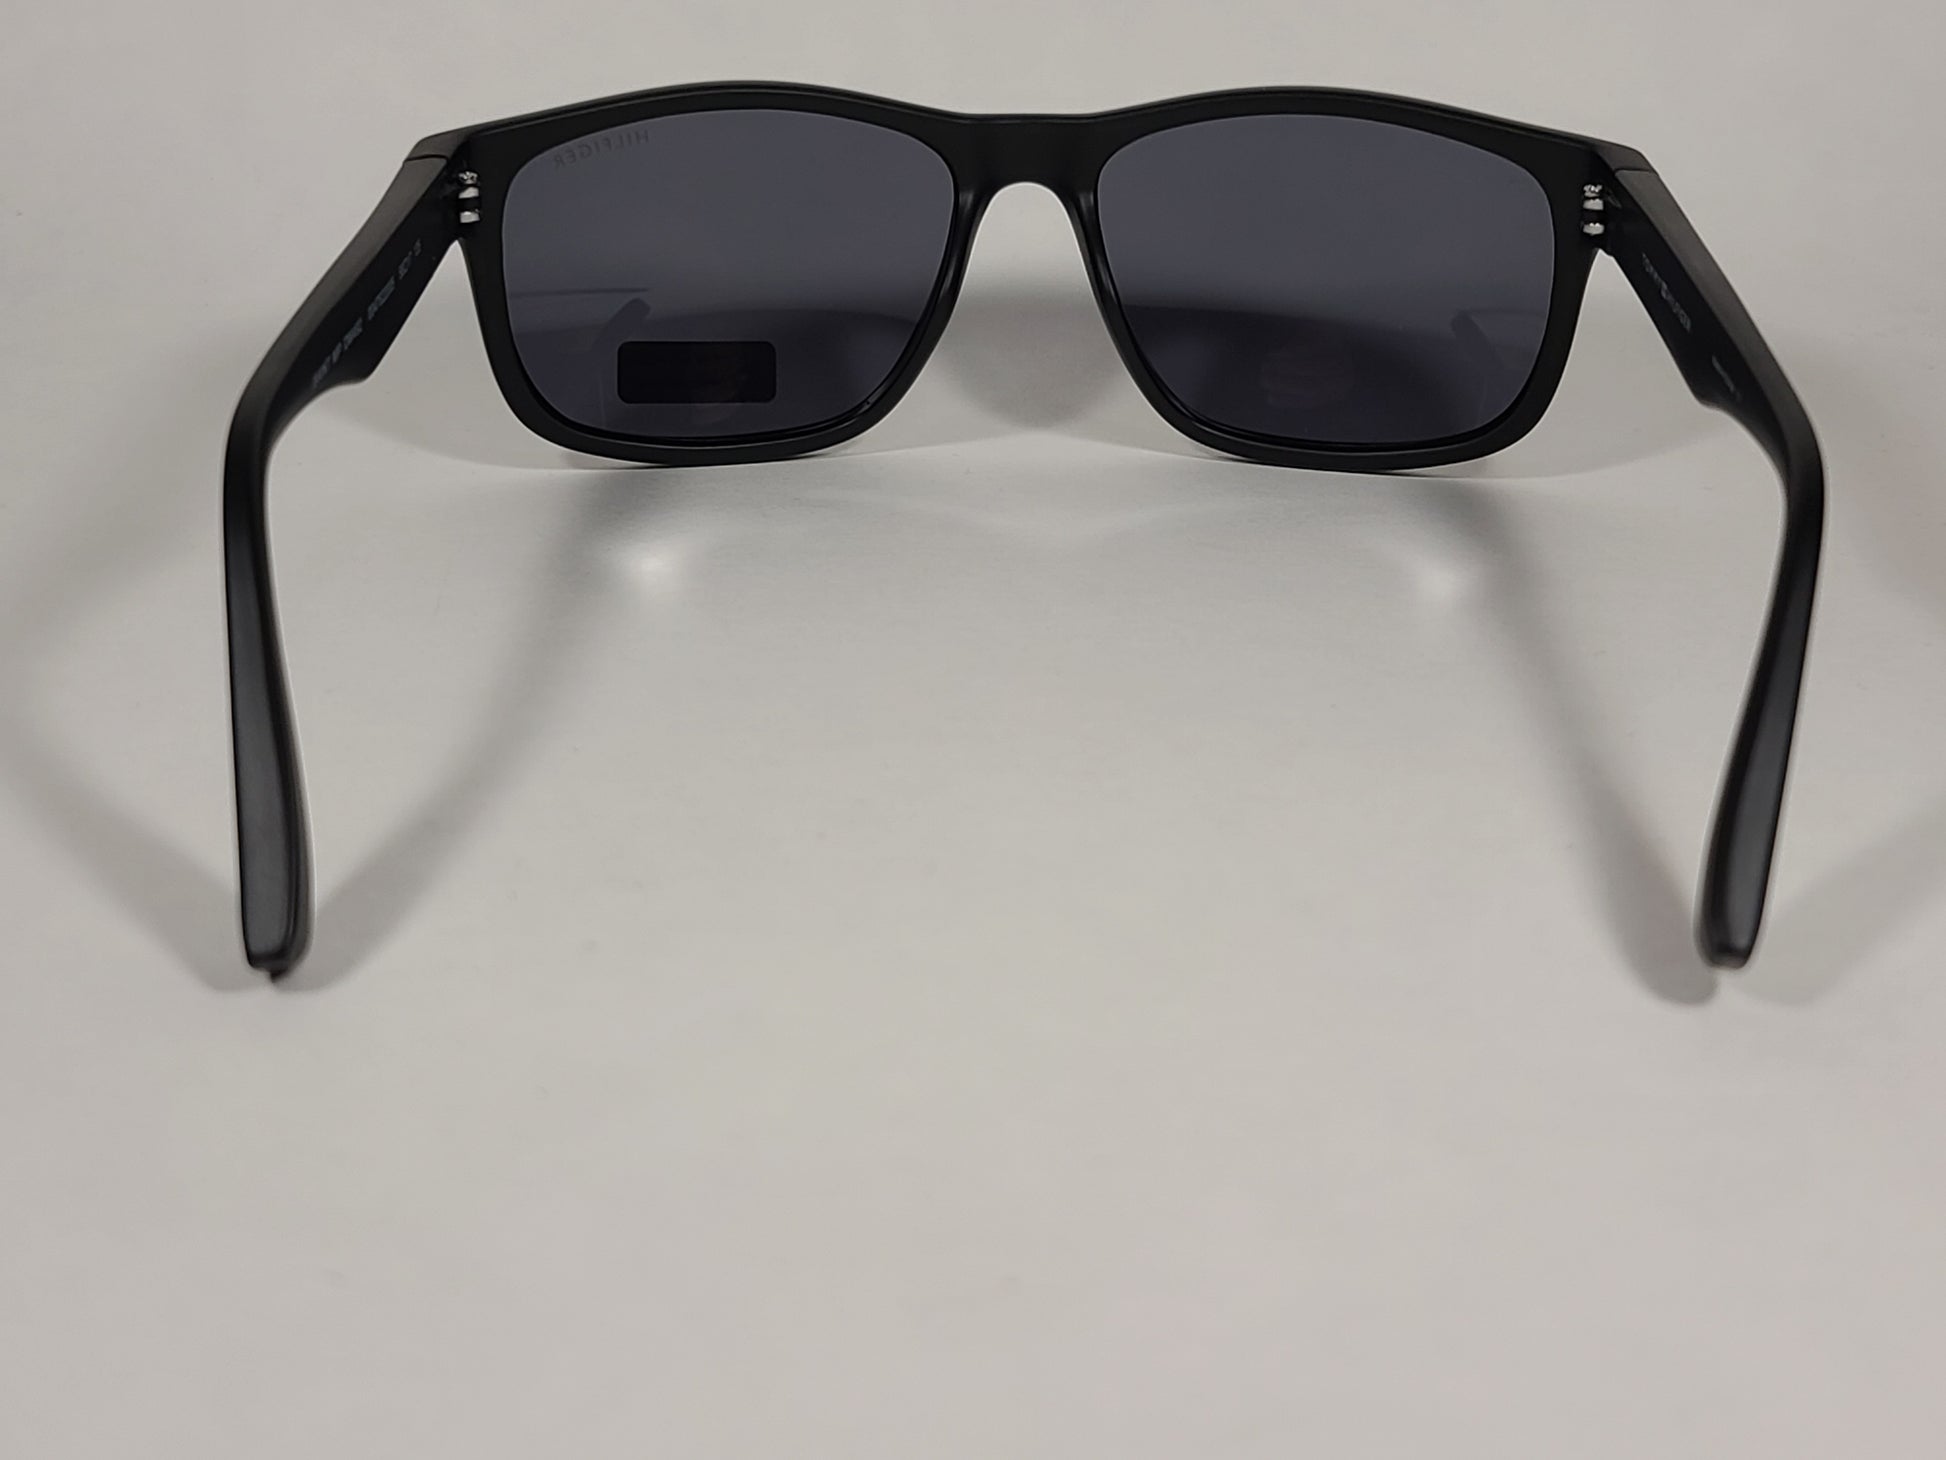 Tommy Hilfiger Saint Rectangular Sunglasses Matte Black Frame Gray Lens SAINT MP OM492 - Sunglasses